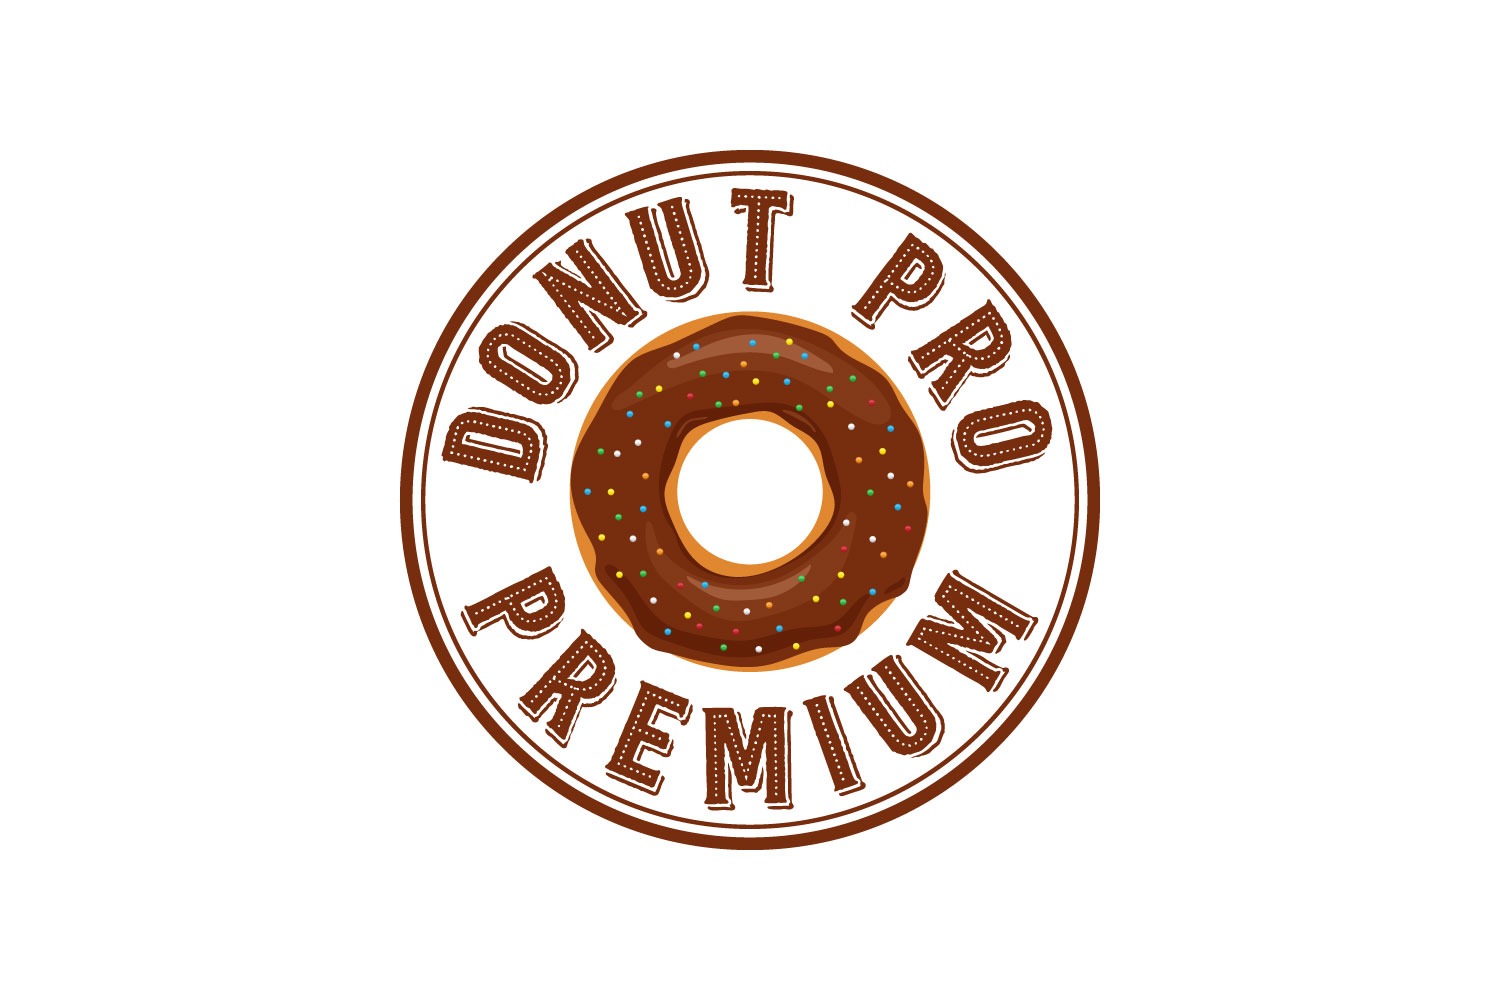 Donut logo vector free download